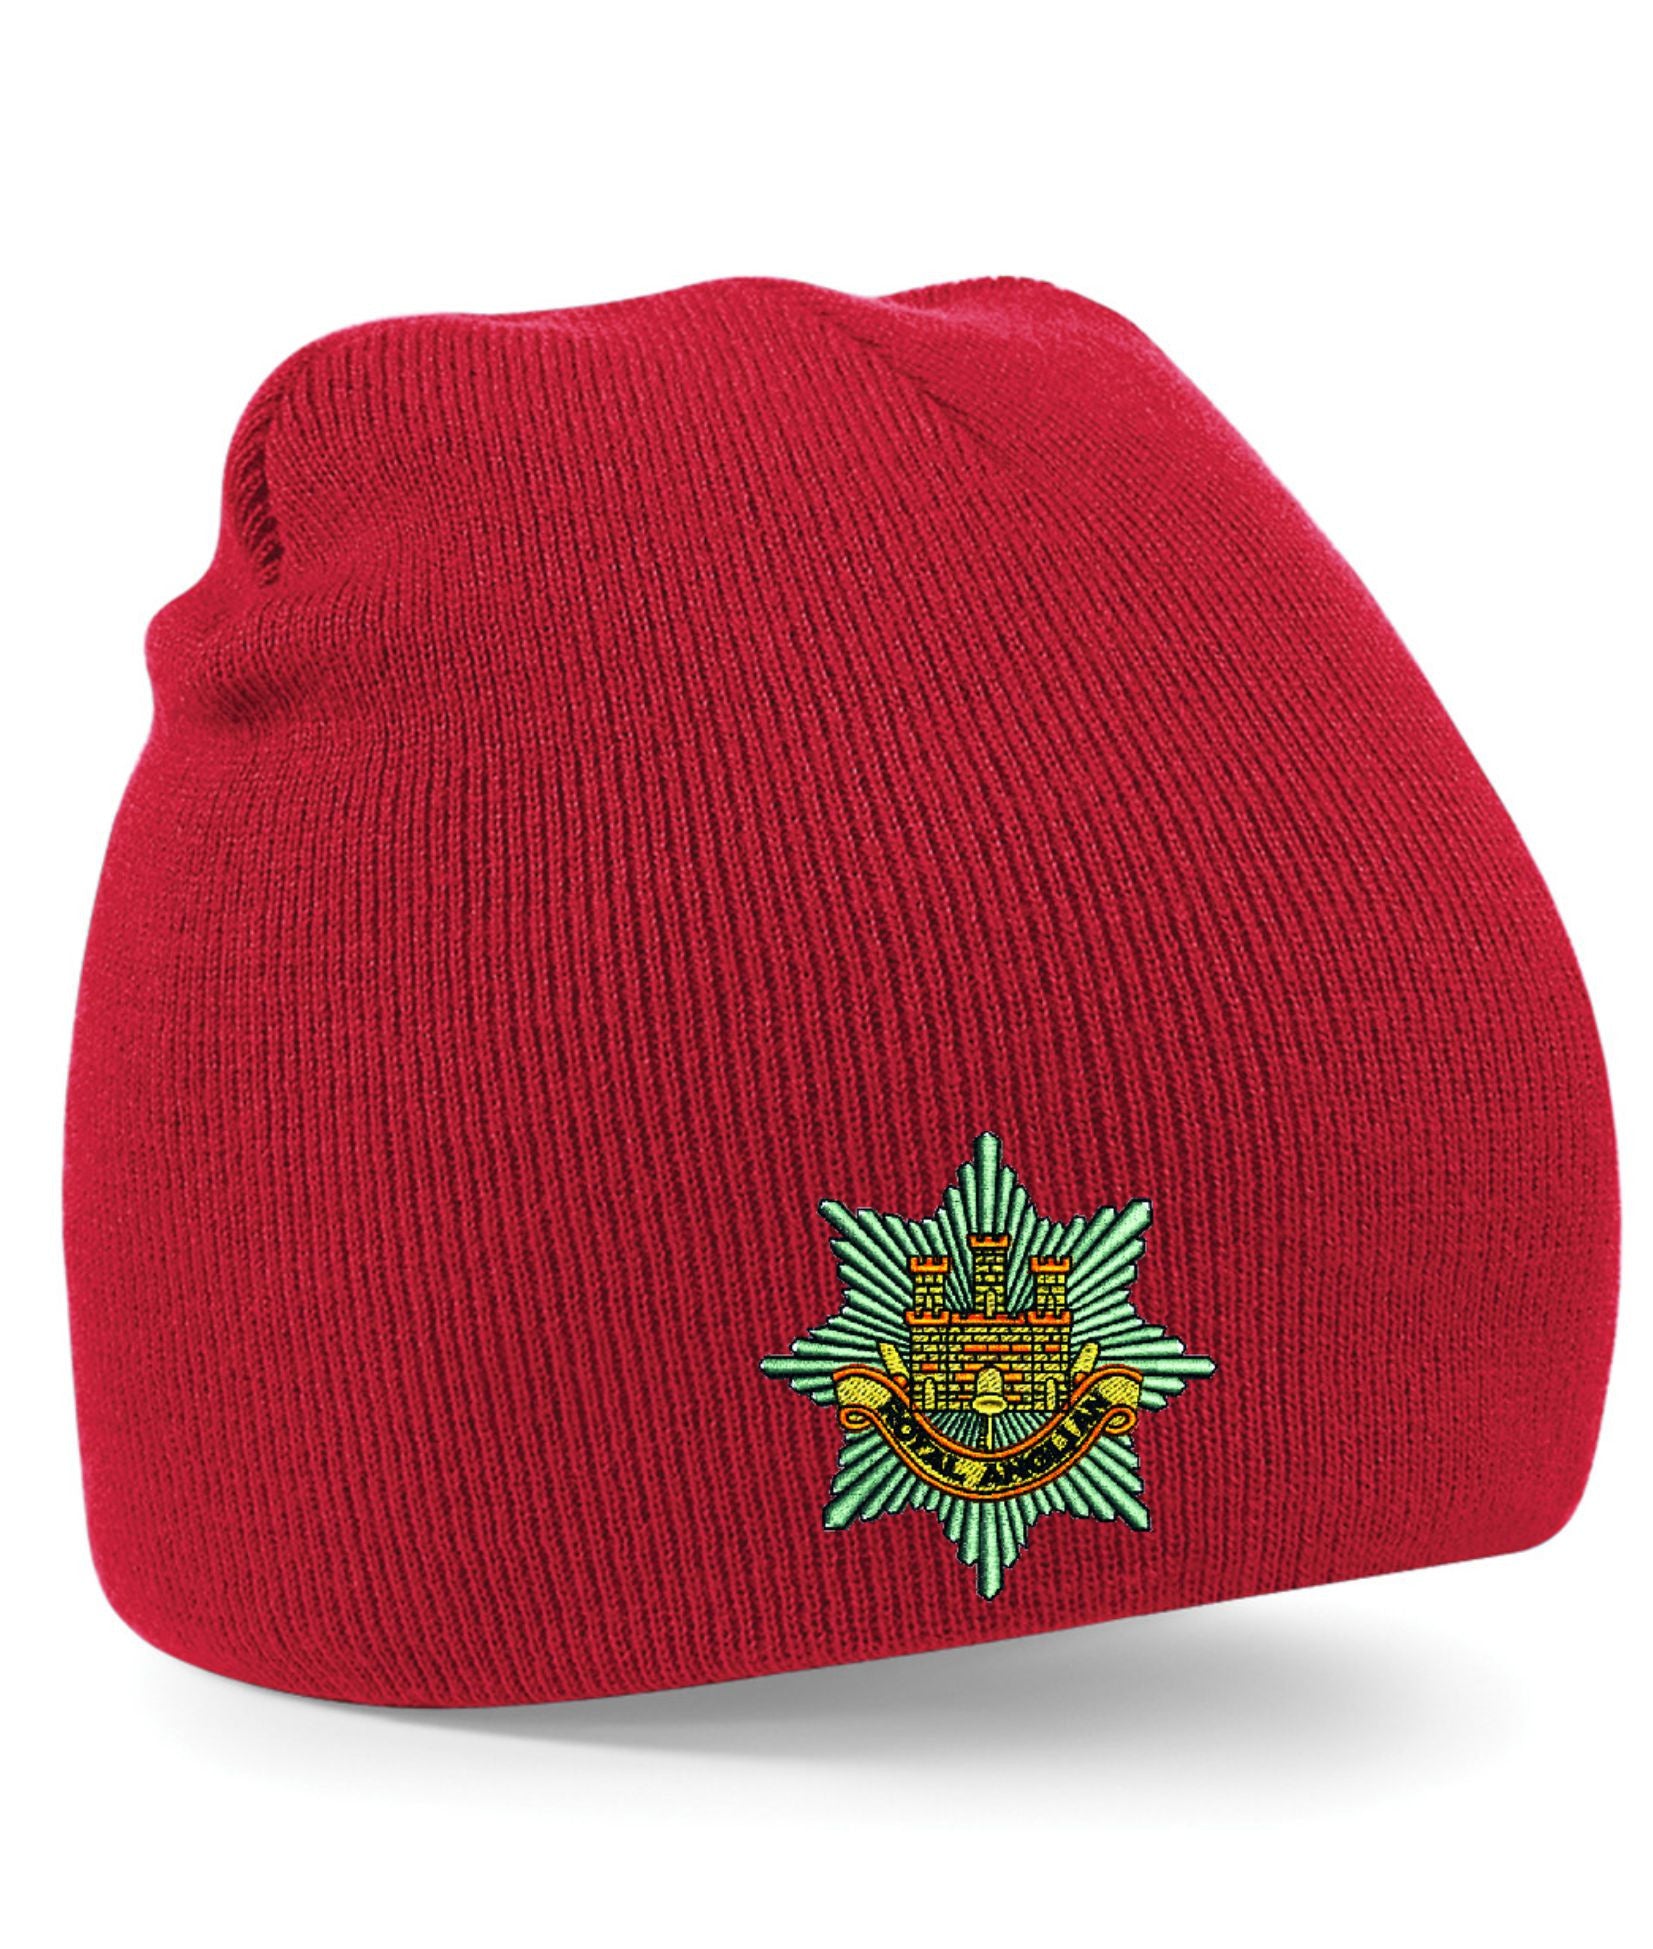 Royal Anglian Beanie Hats